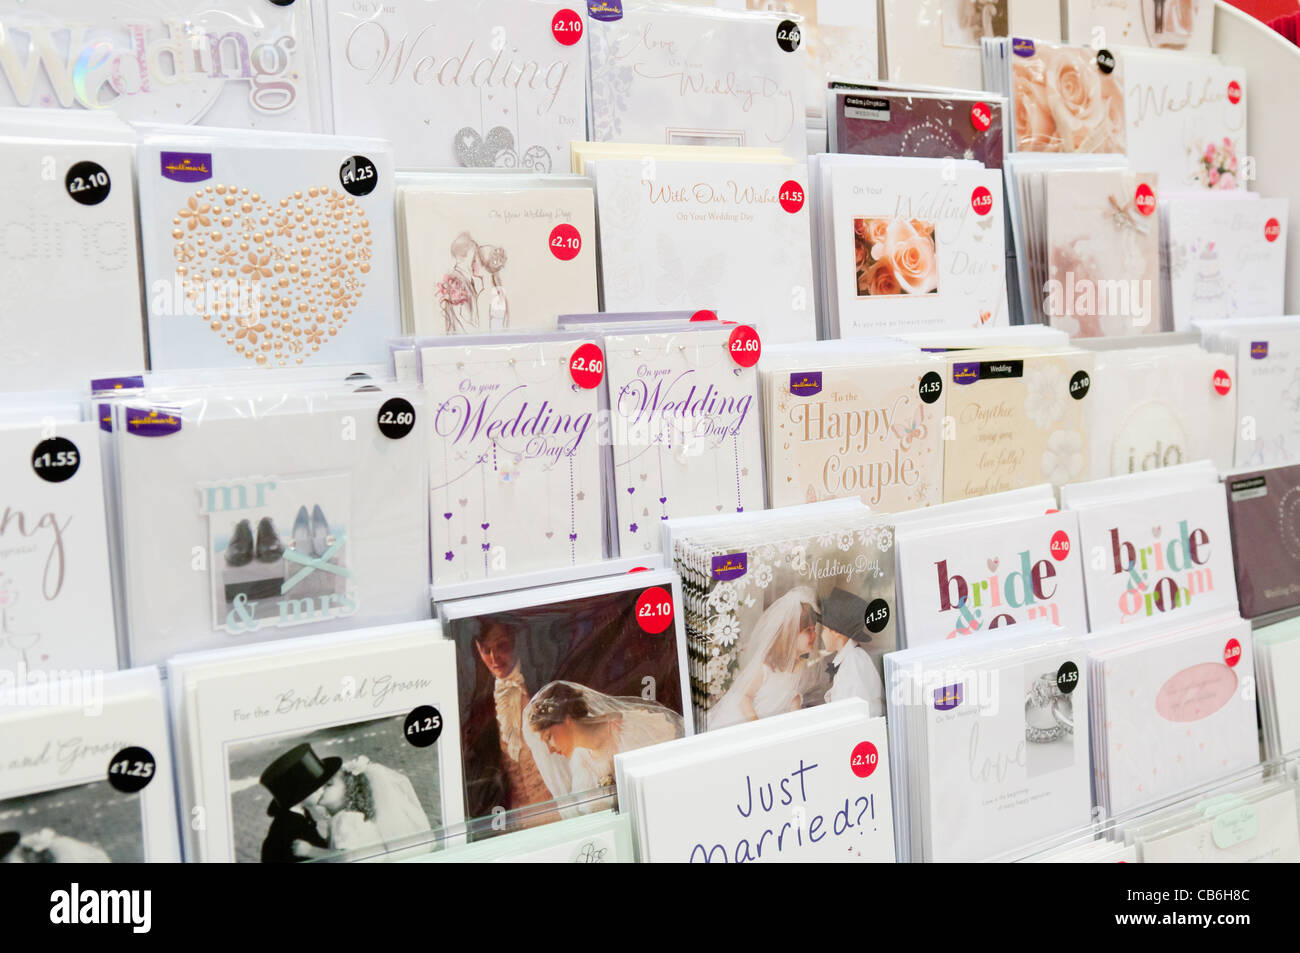 Shelves of Wedding Cards in a Tesco Store Stock Photo